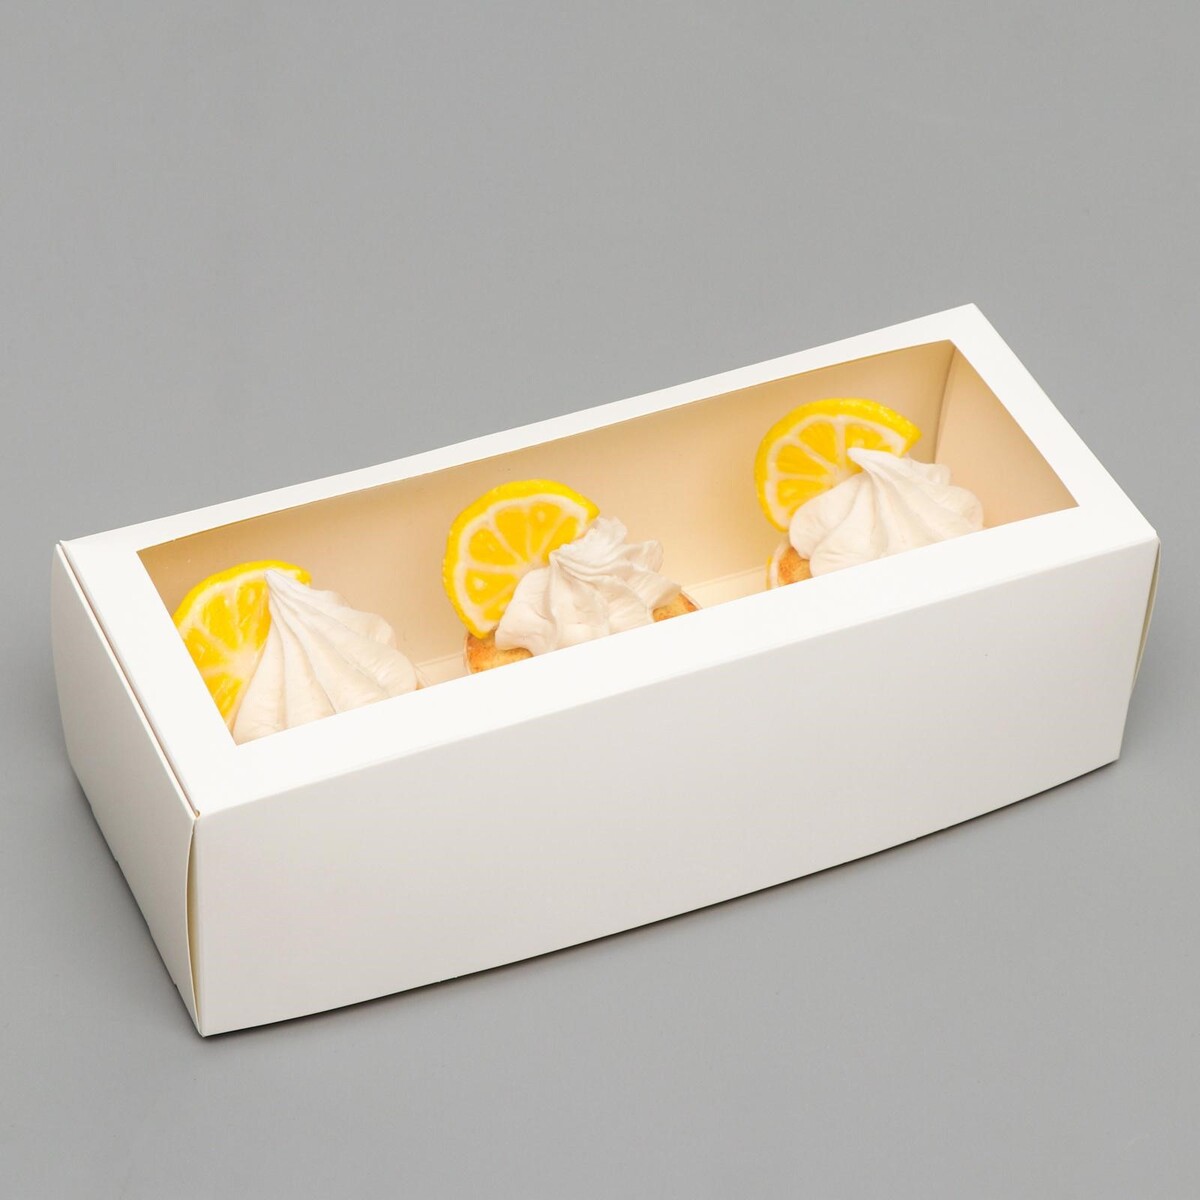 Коробка складная с окном под рулет, белая, 26 х 10 х 8 см коробка складная под 3 конфеты белая 5 х 13 7 х 3 5 см